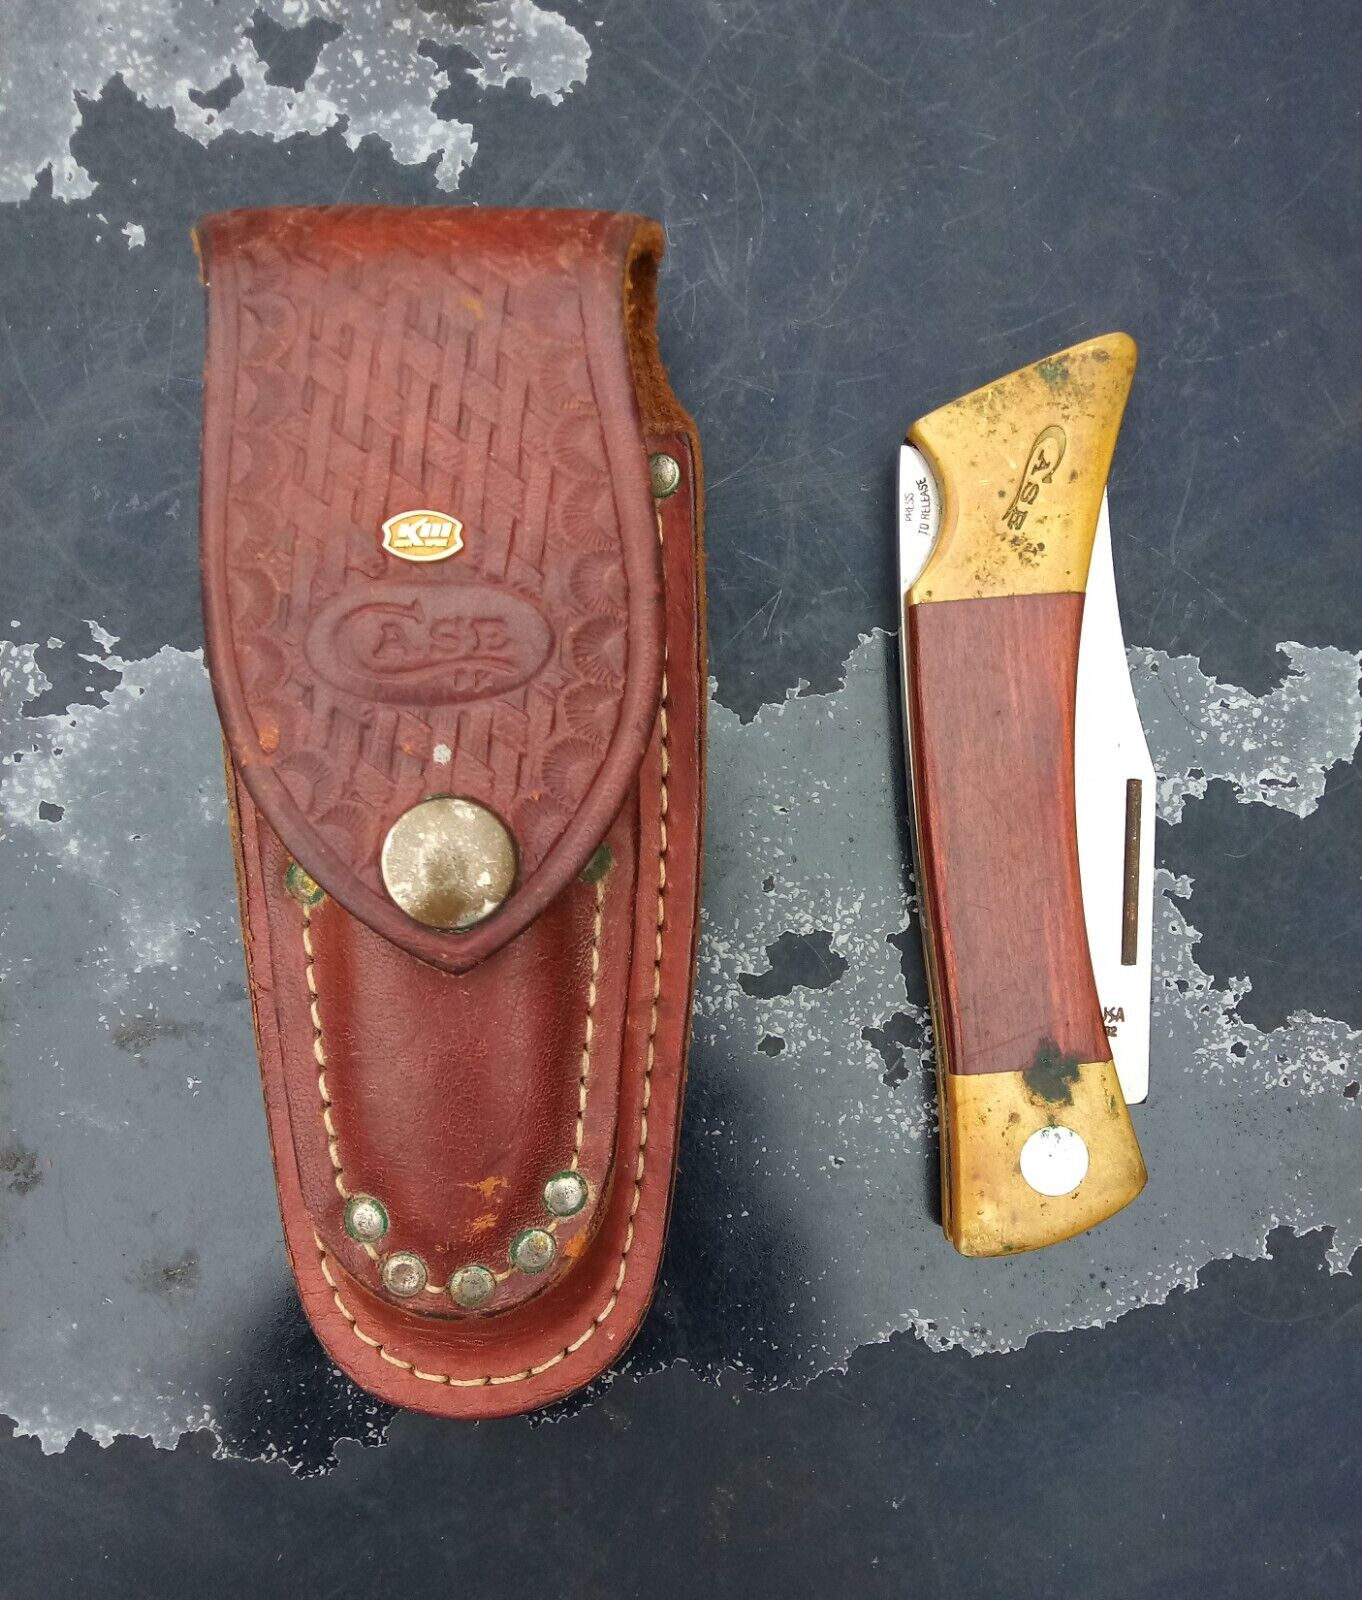 VTG Case XX CHANGER Pocket Knife & Sheath NO EXTRA BLADES Carried Used OFFER?